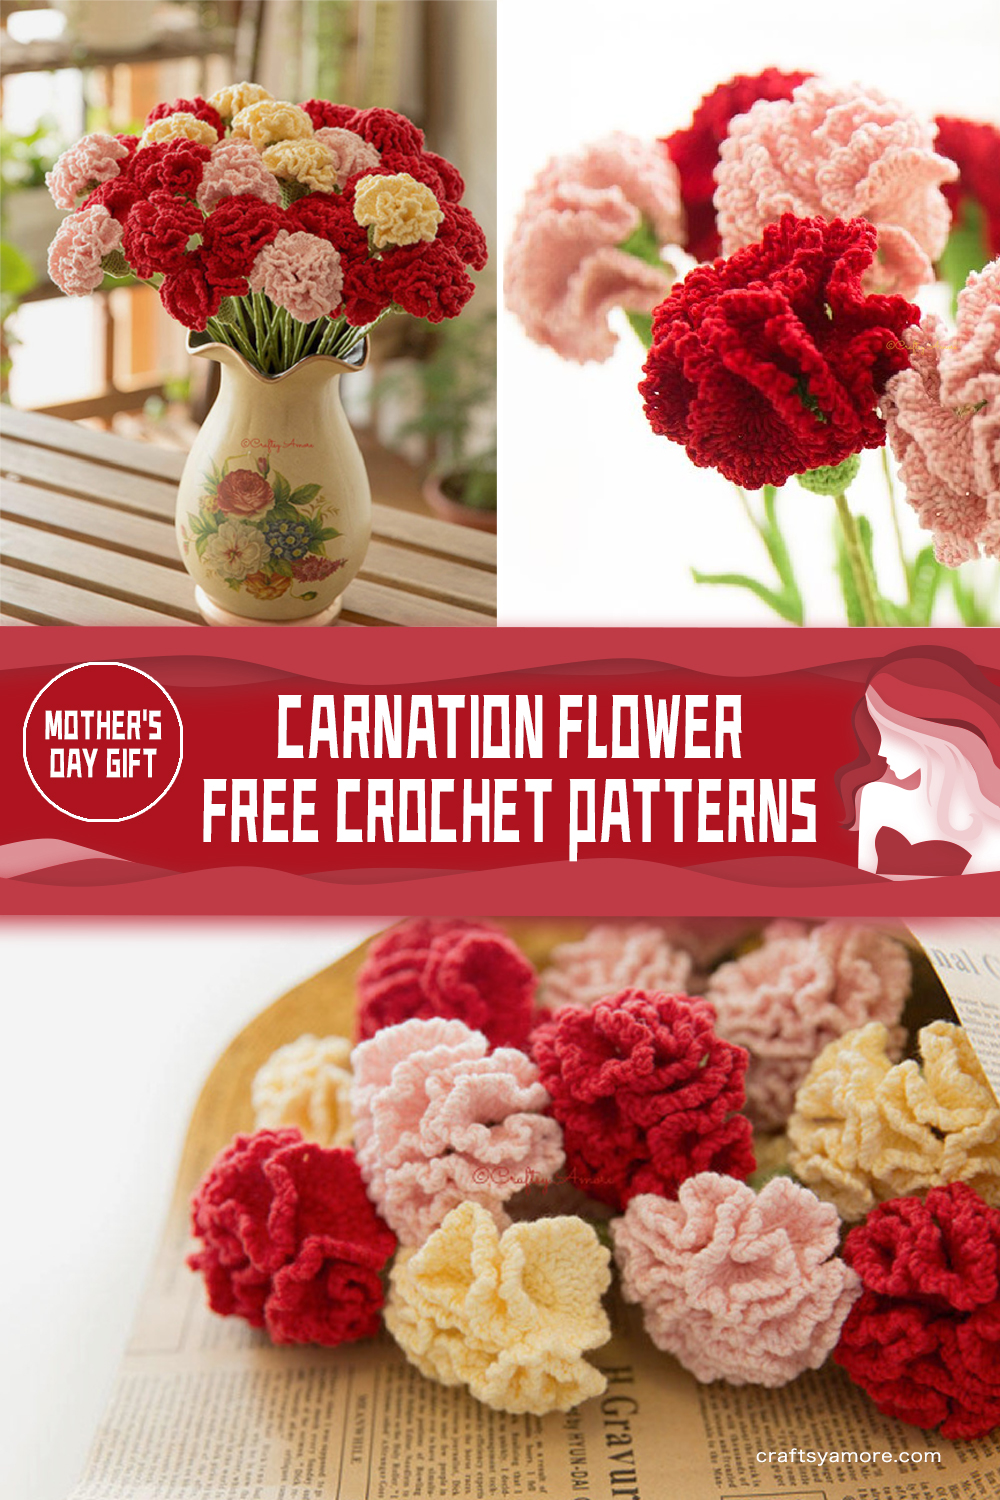 FREE Carnation Flower Crochet Patterns